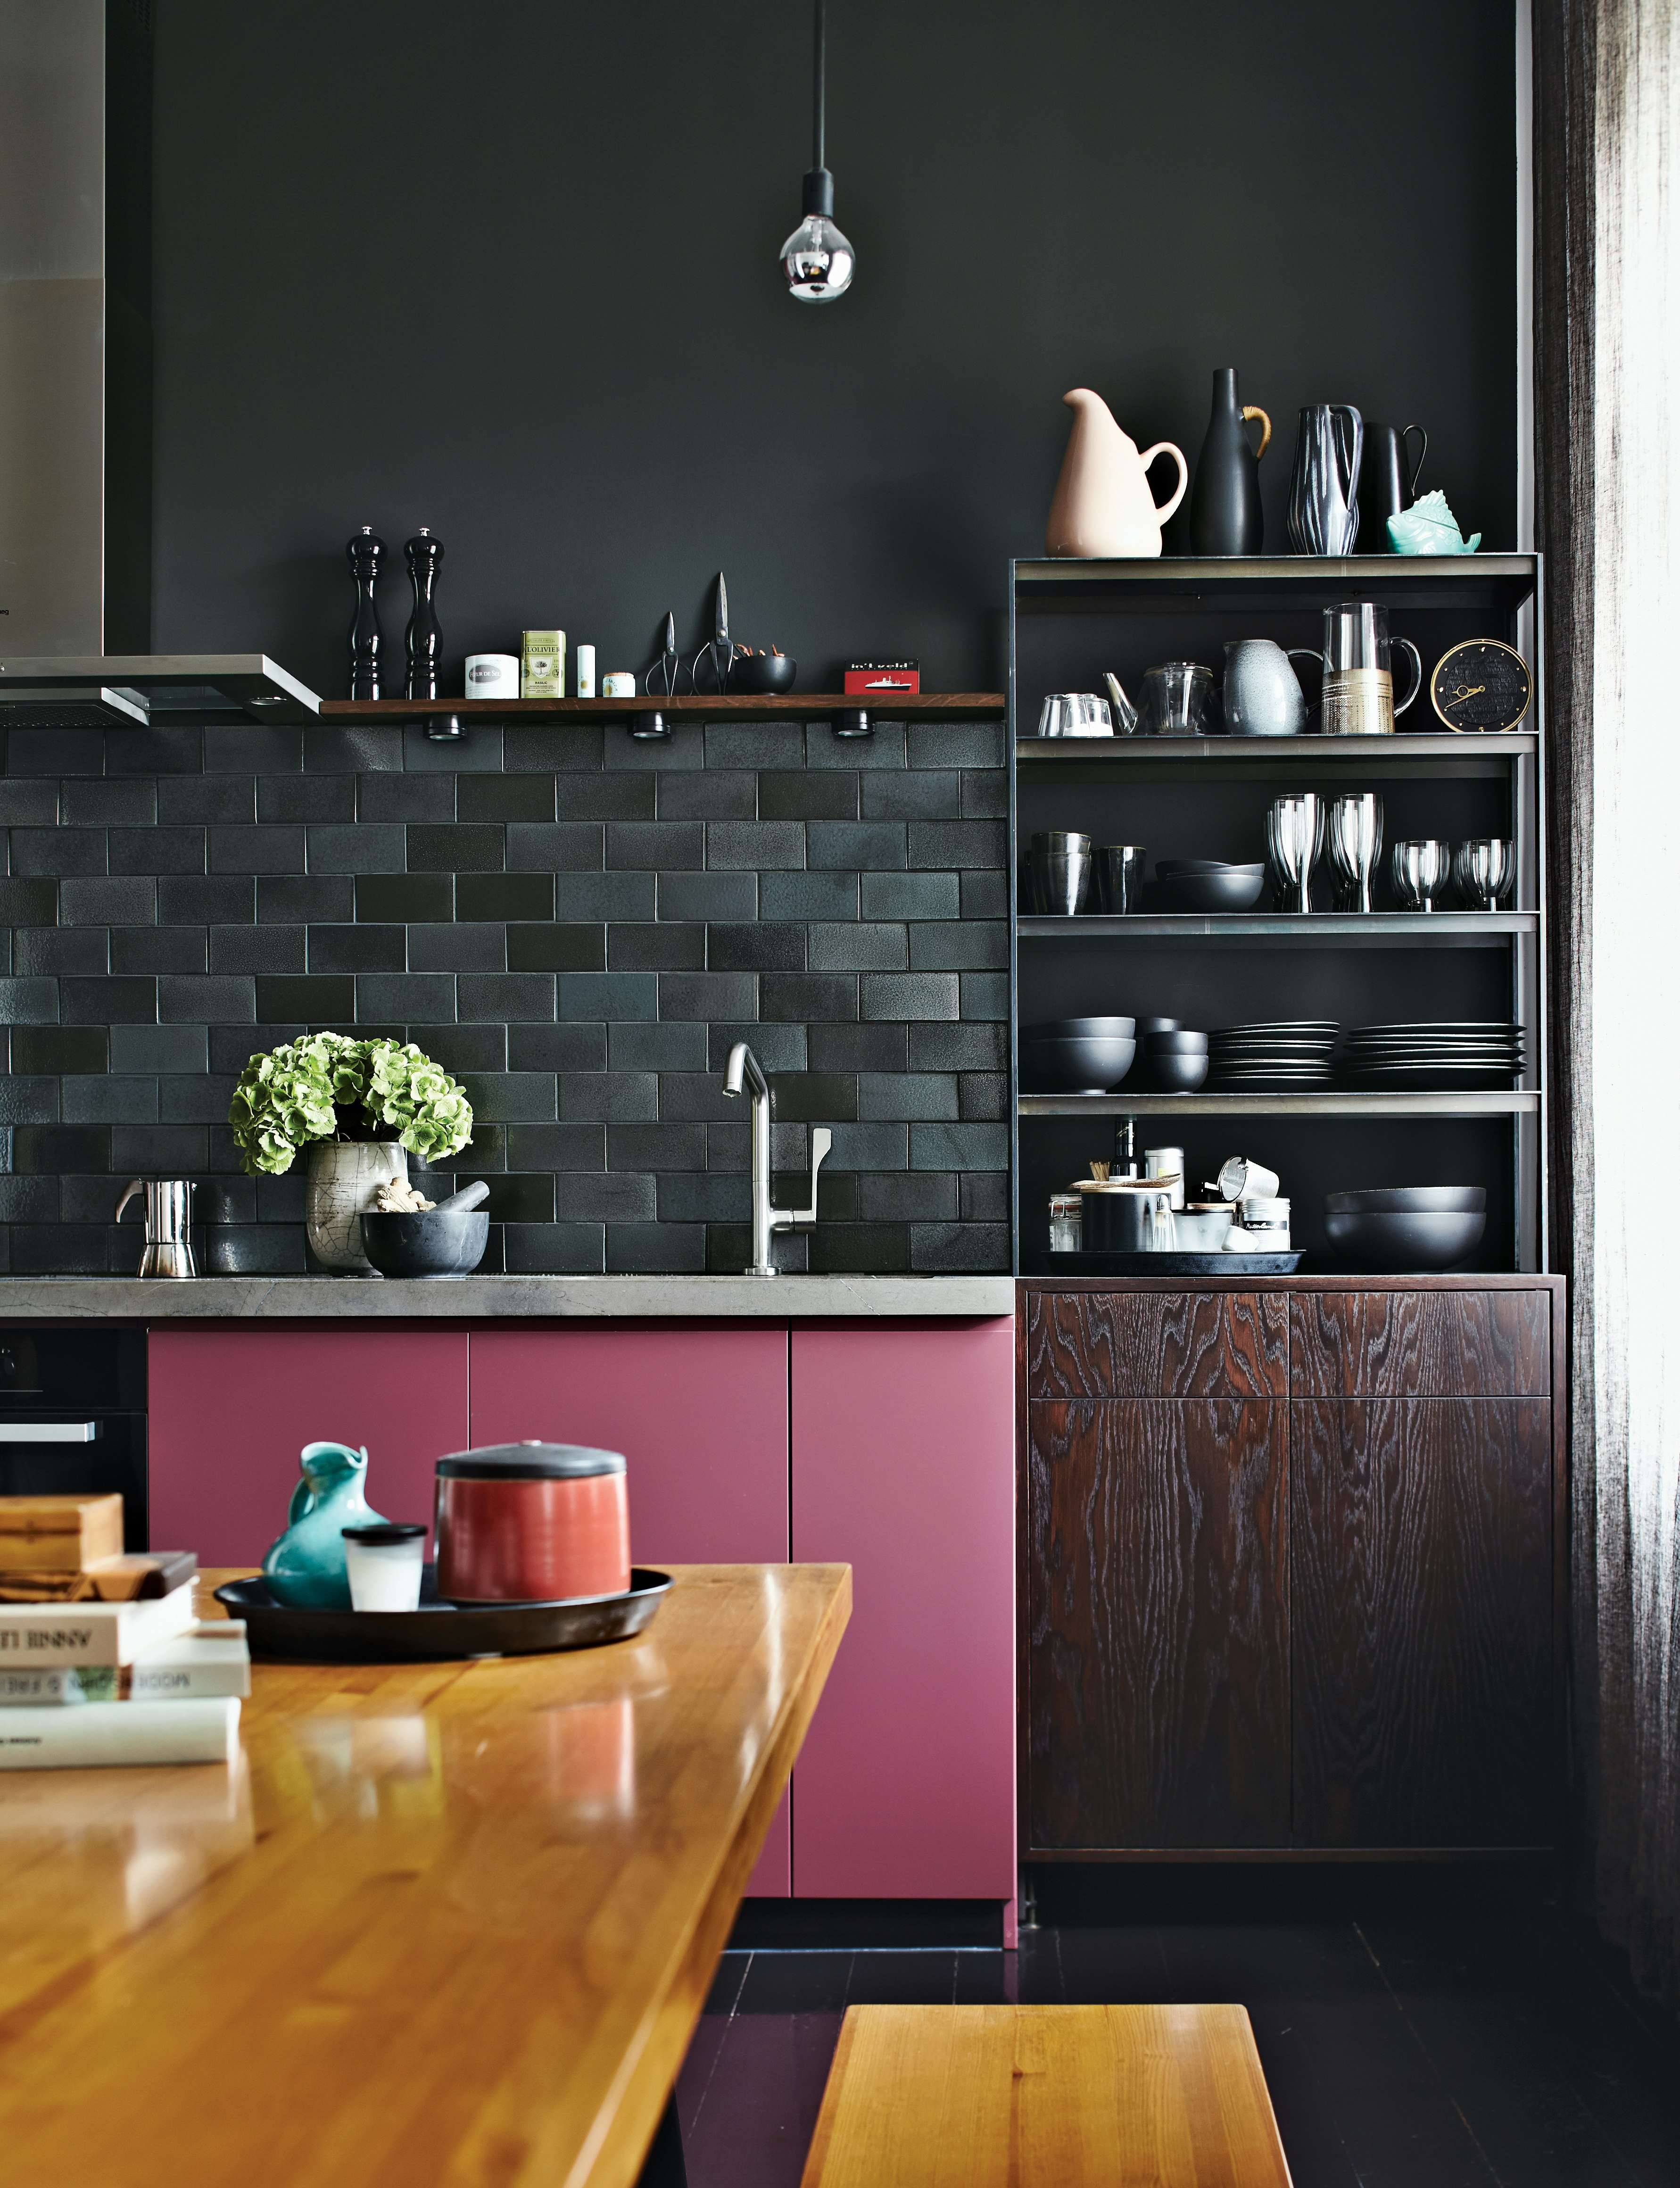 11 Black Kitchens - Black Cabinet and Backsplash Ideas